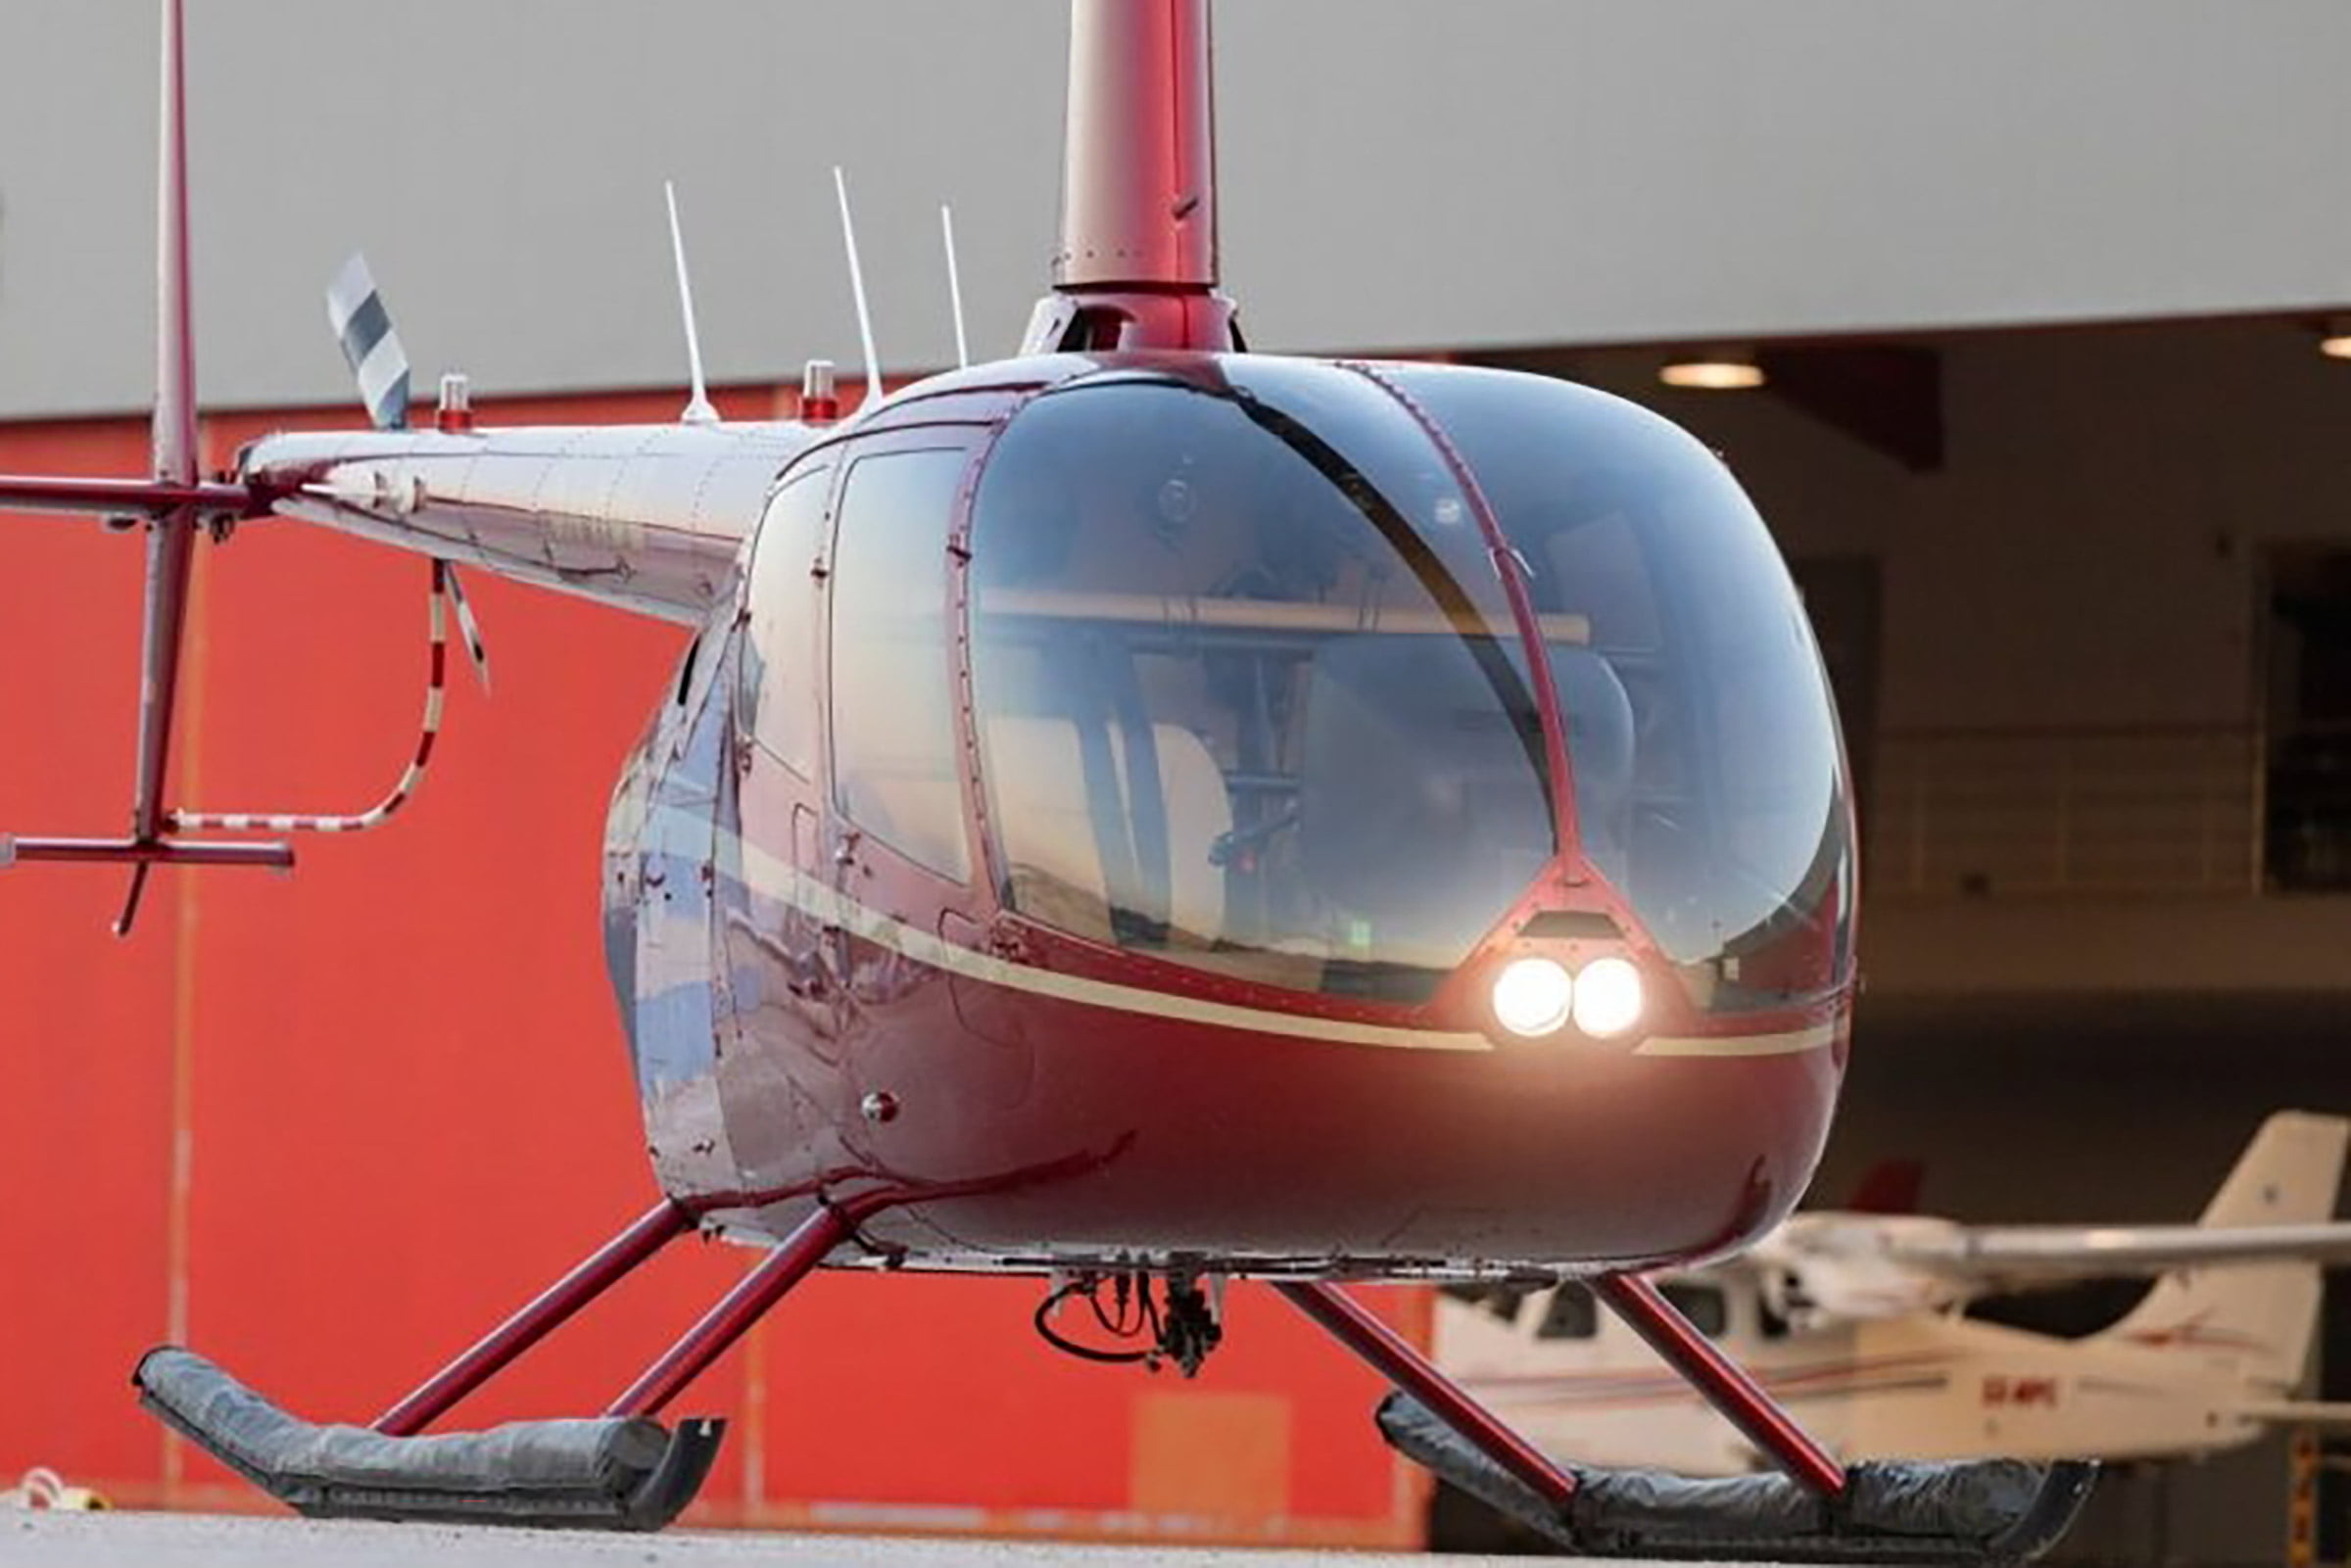 Robinson 66 SX-HDZ Helicopter Charter